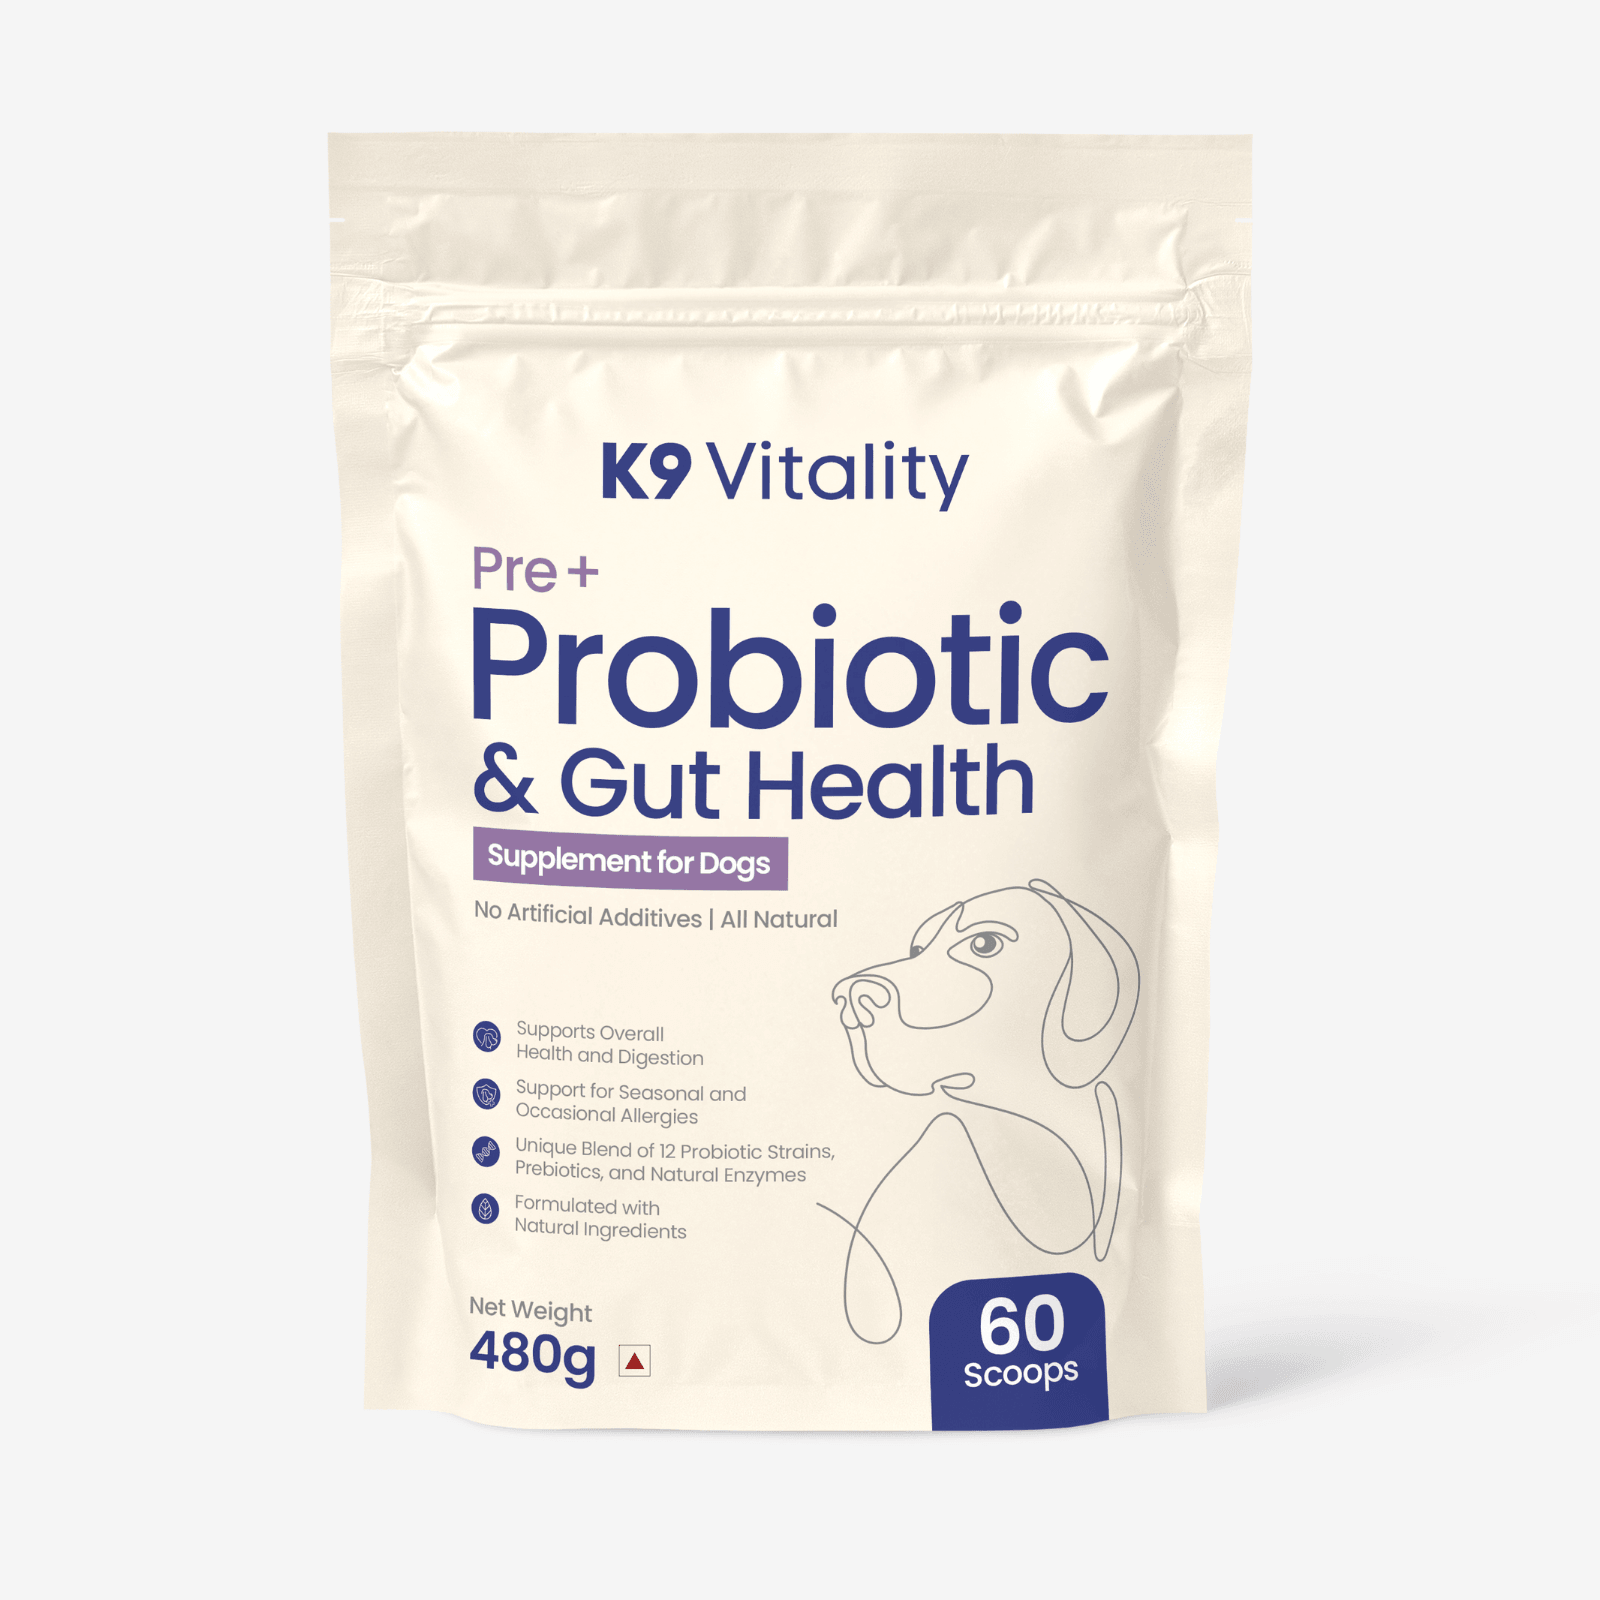 Pre + Probiotics & Gut Health For Dogs - K9 Vitality